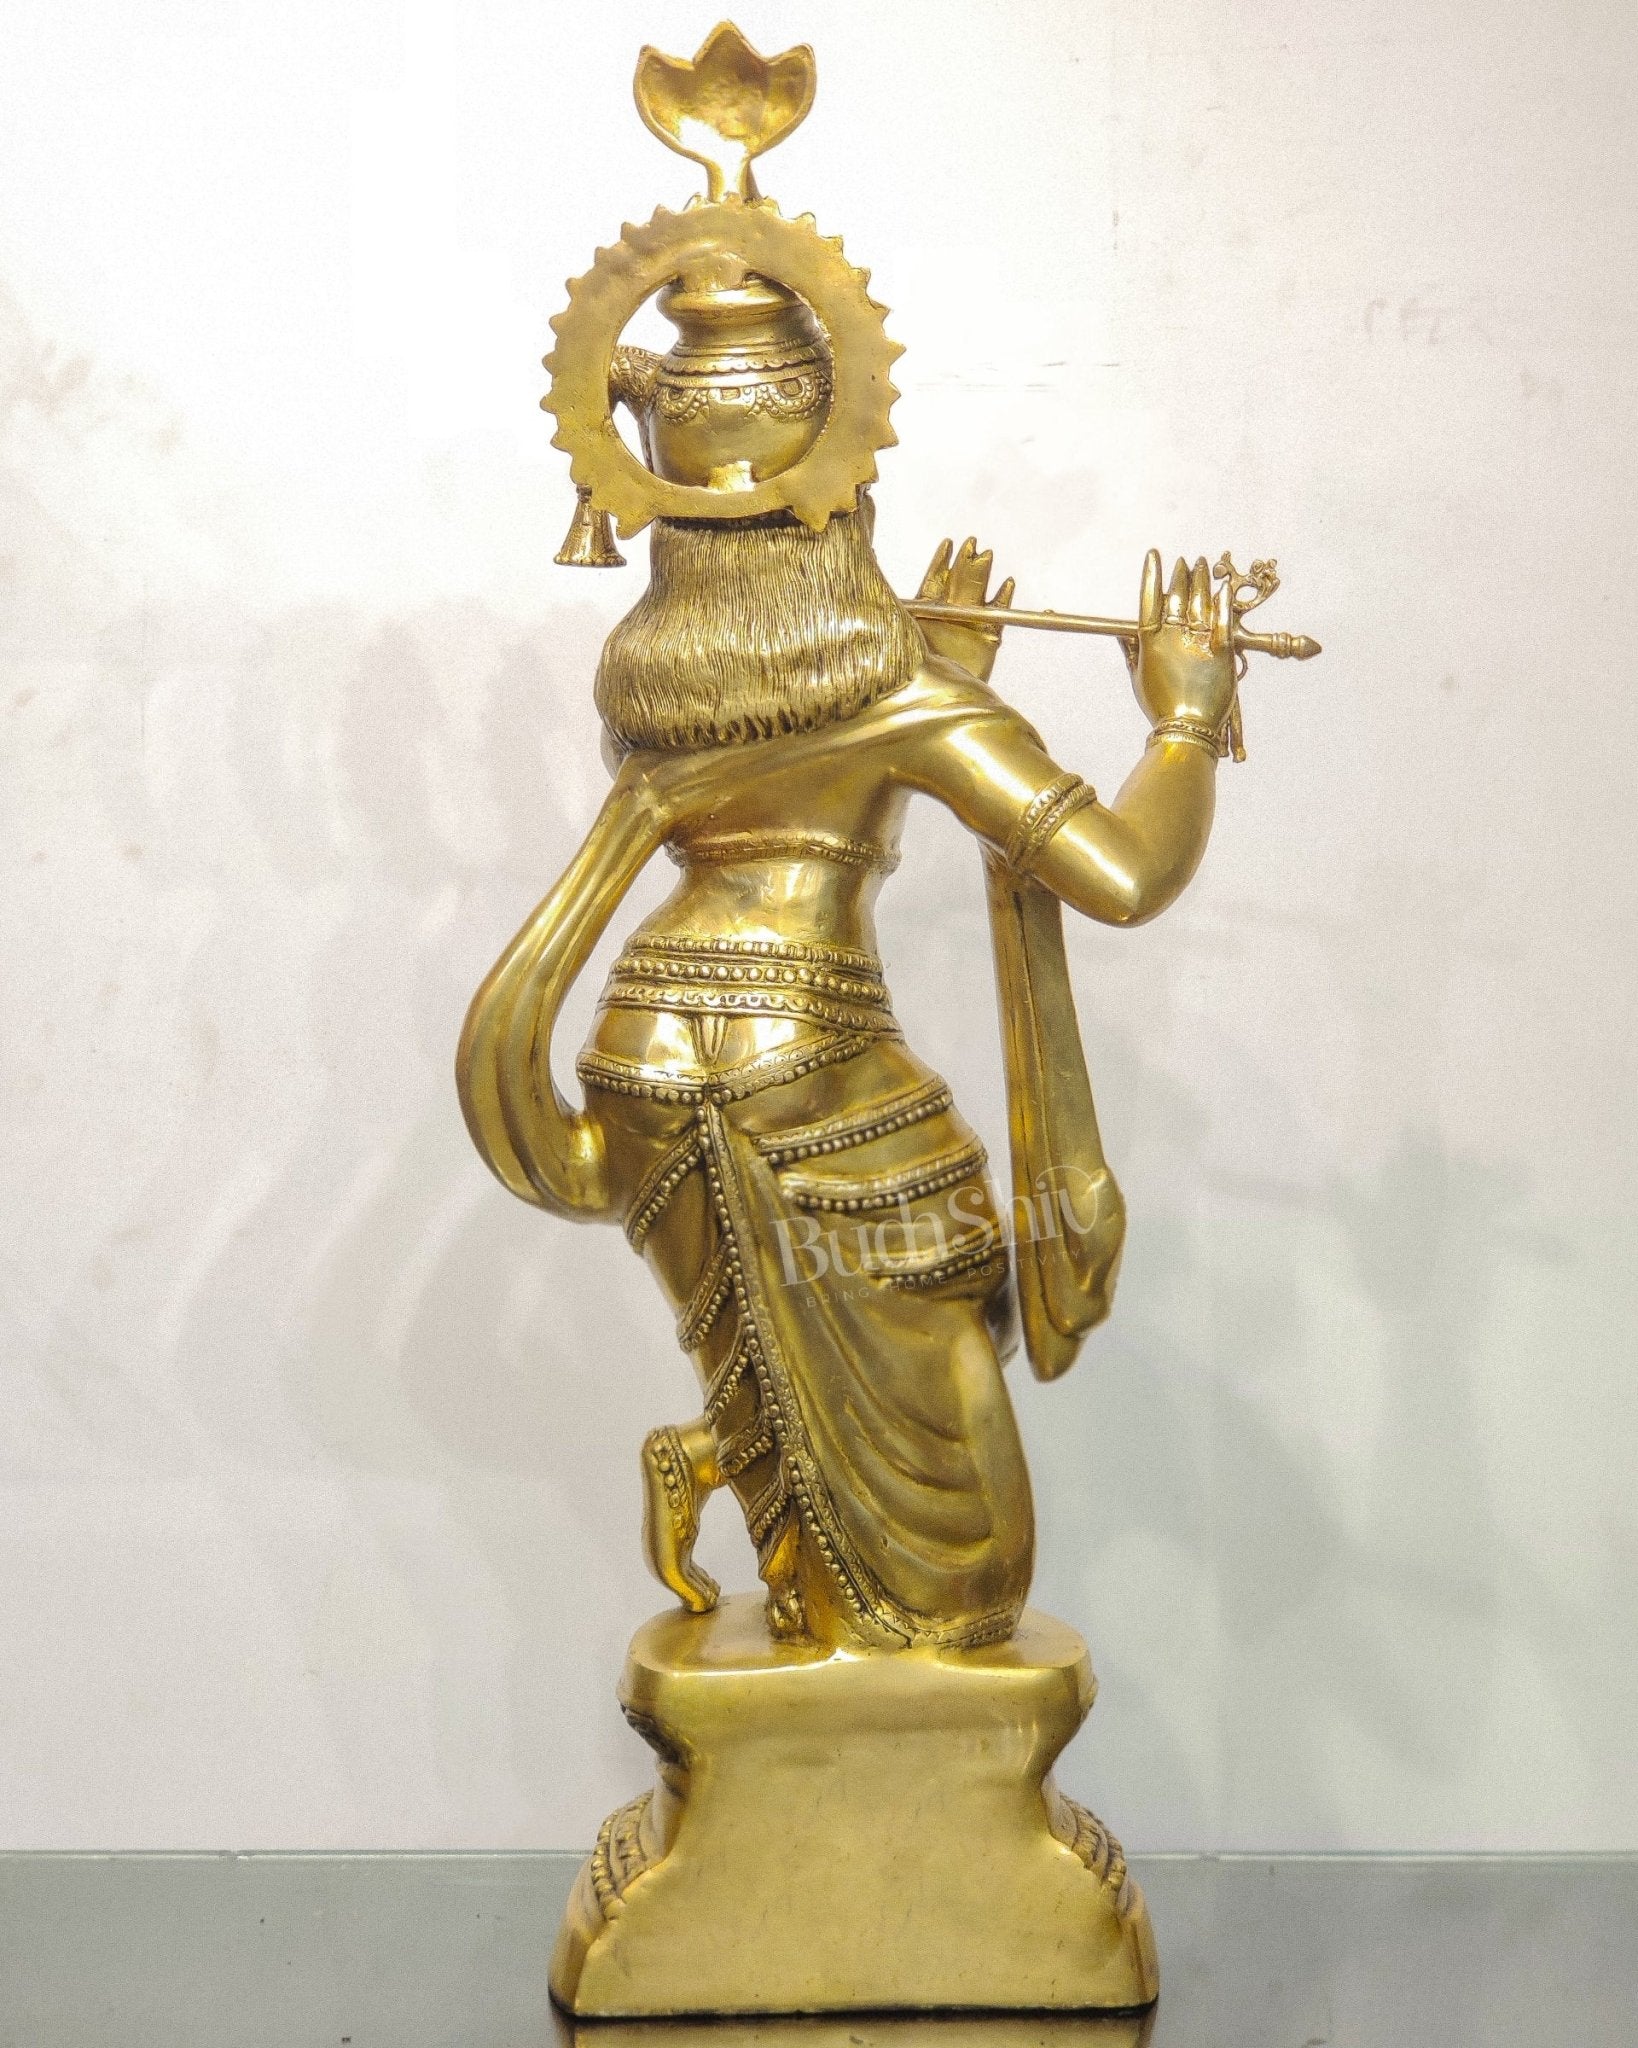 Divine Large Sized Lord Krishna Statue | Matte Brass Finish 3 feet - Budhshiv.com